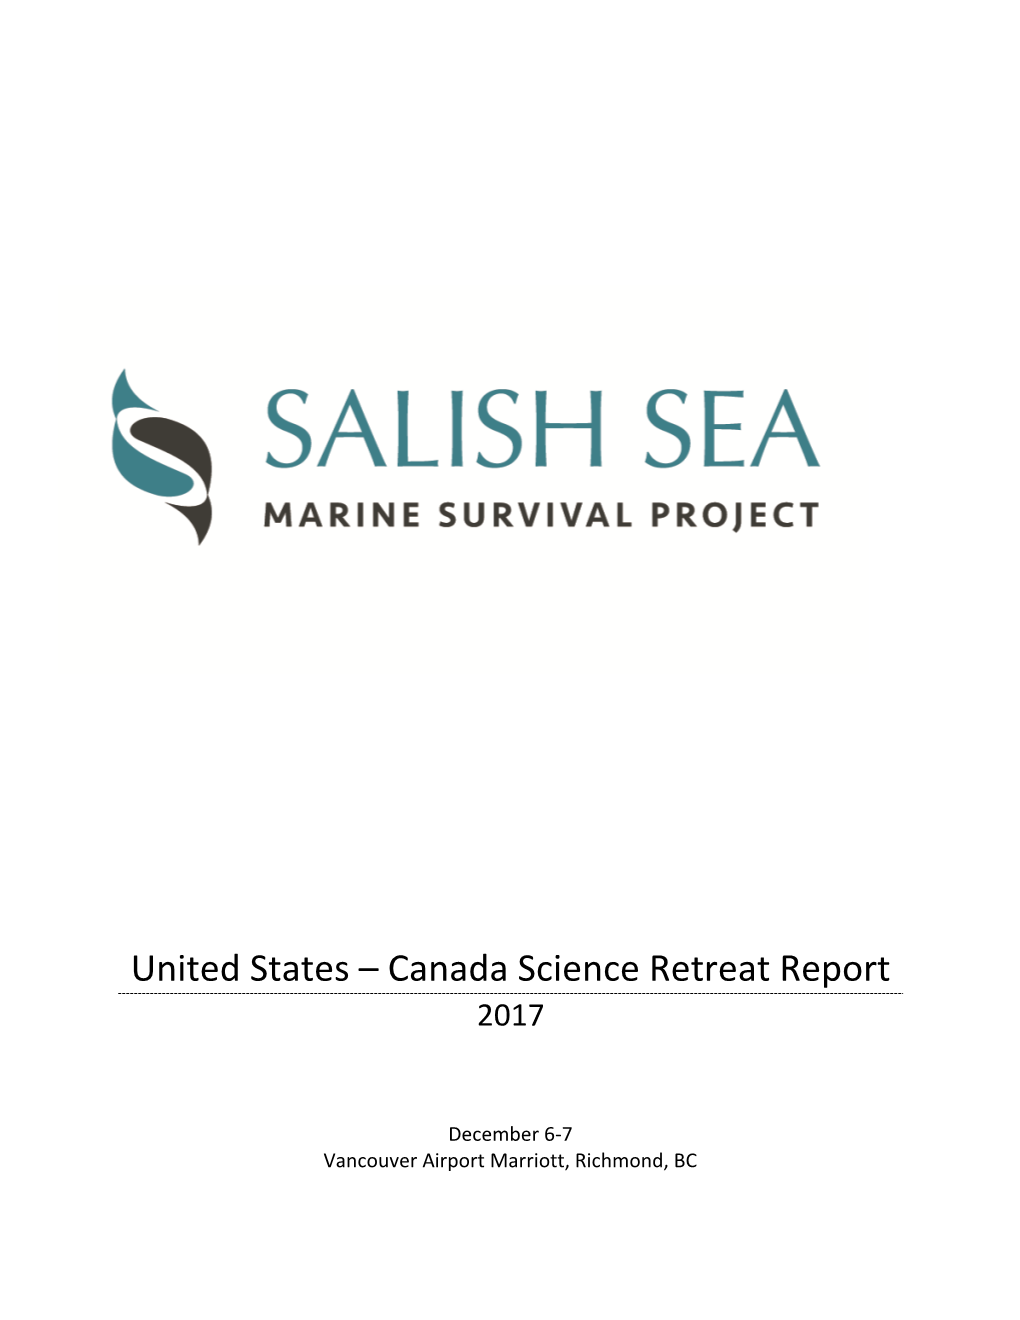 Canada Science Retreat Report 2017